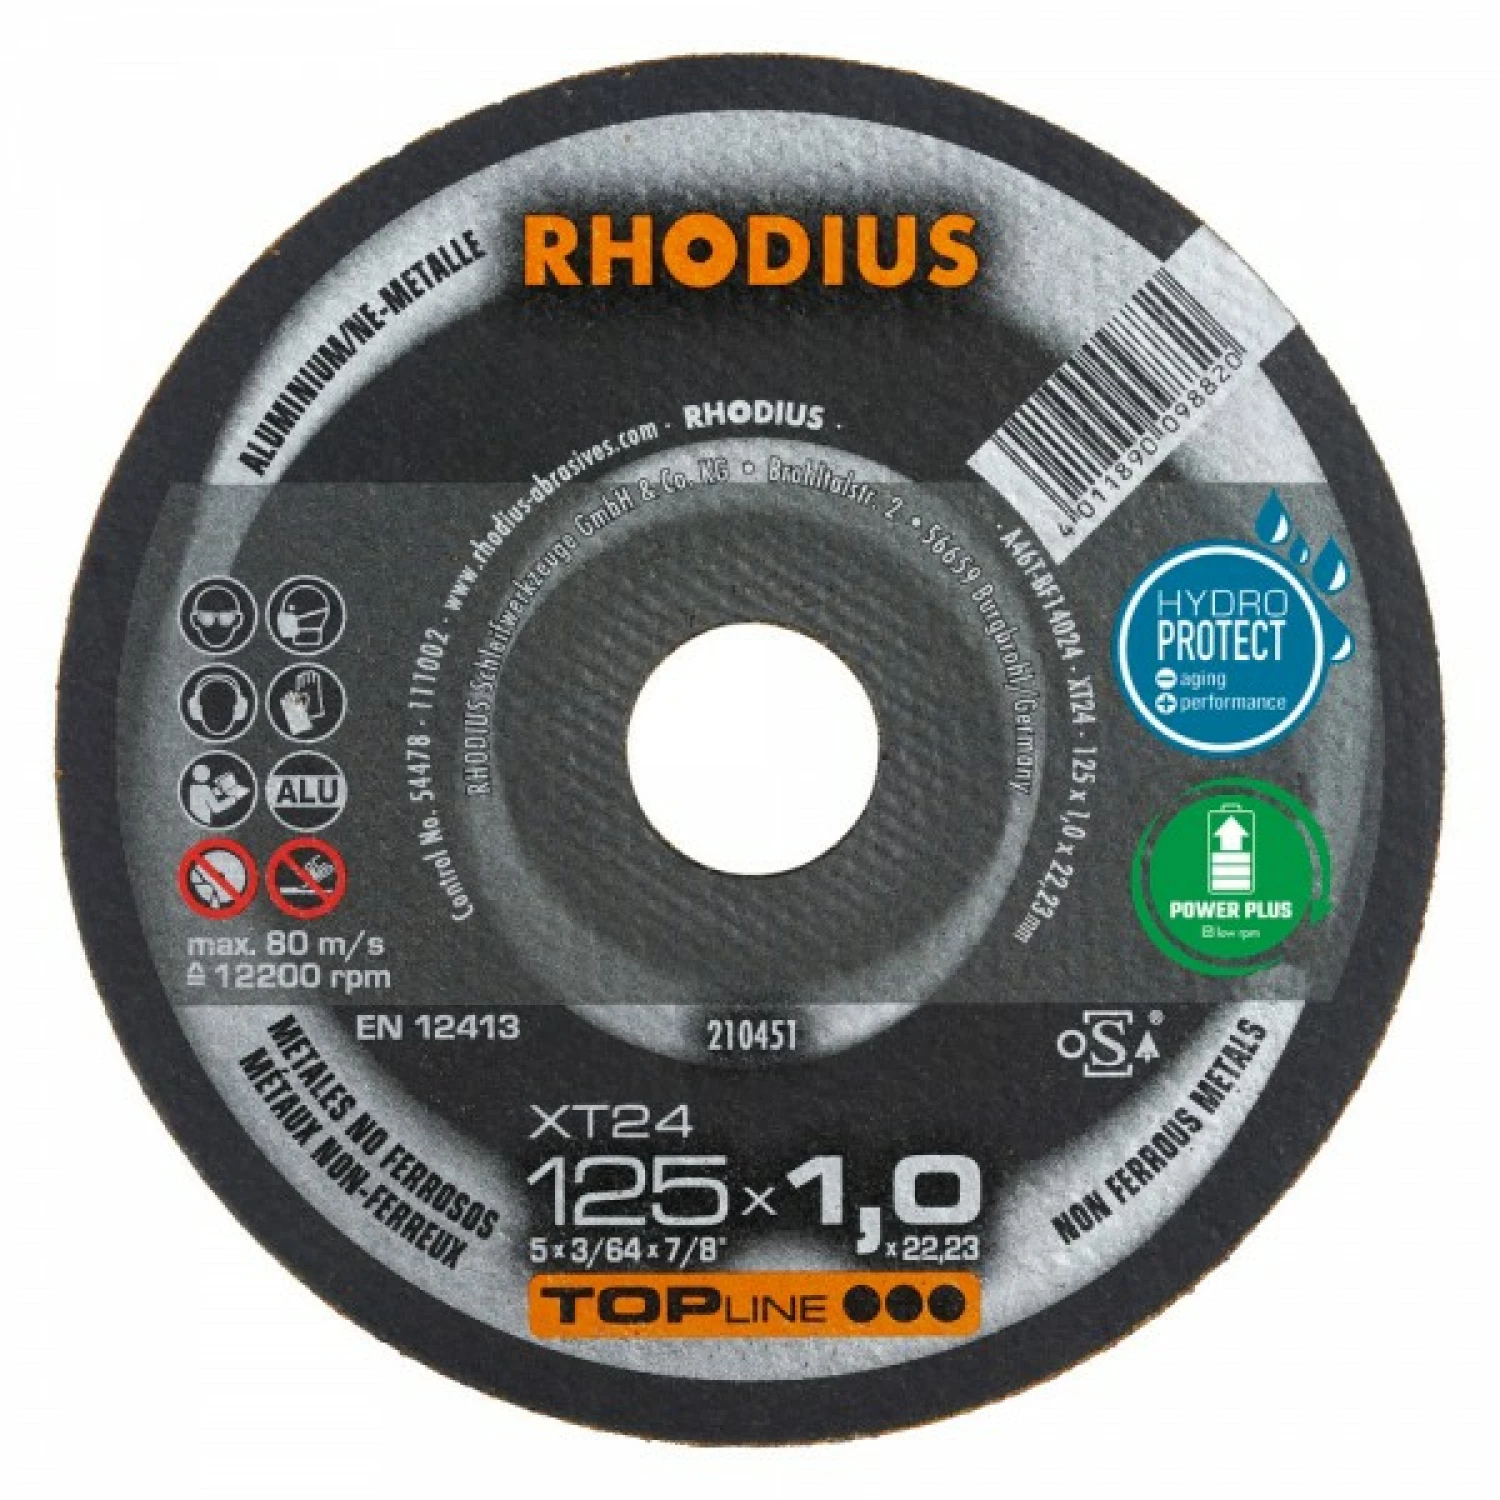 Rhodius 210451 XT24 TOPline lll Disque à tronçonner extra fin 125 x 22,23 x 1,0mm (50 pcs)